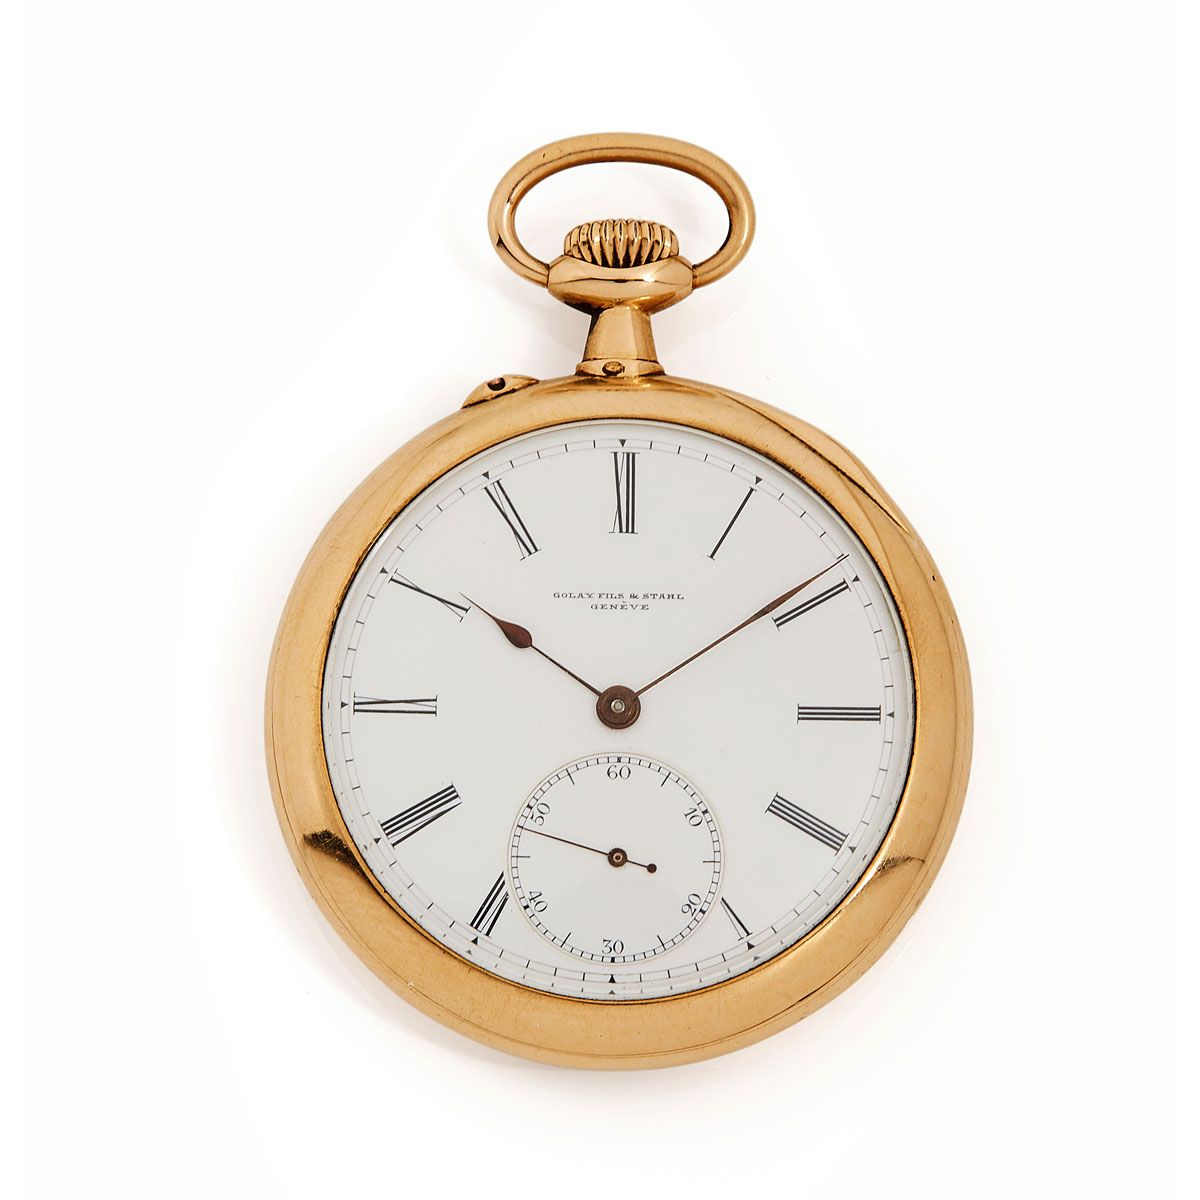 Null Golay Fils & Stahl, nº 30612/100008, hacia 1930


Precioso reloj de bolsill&hellip;